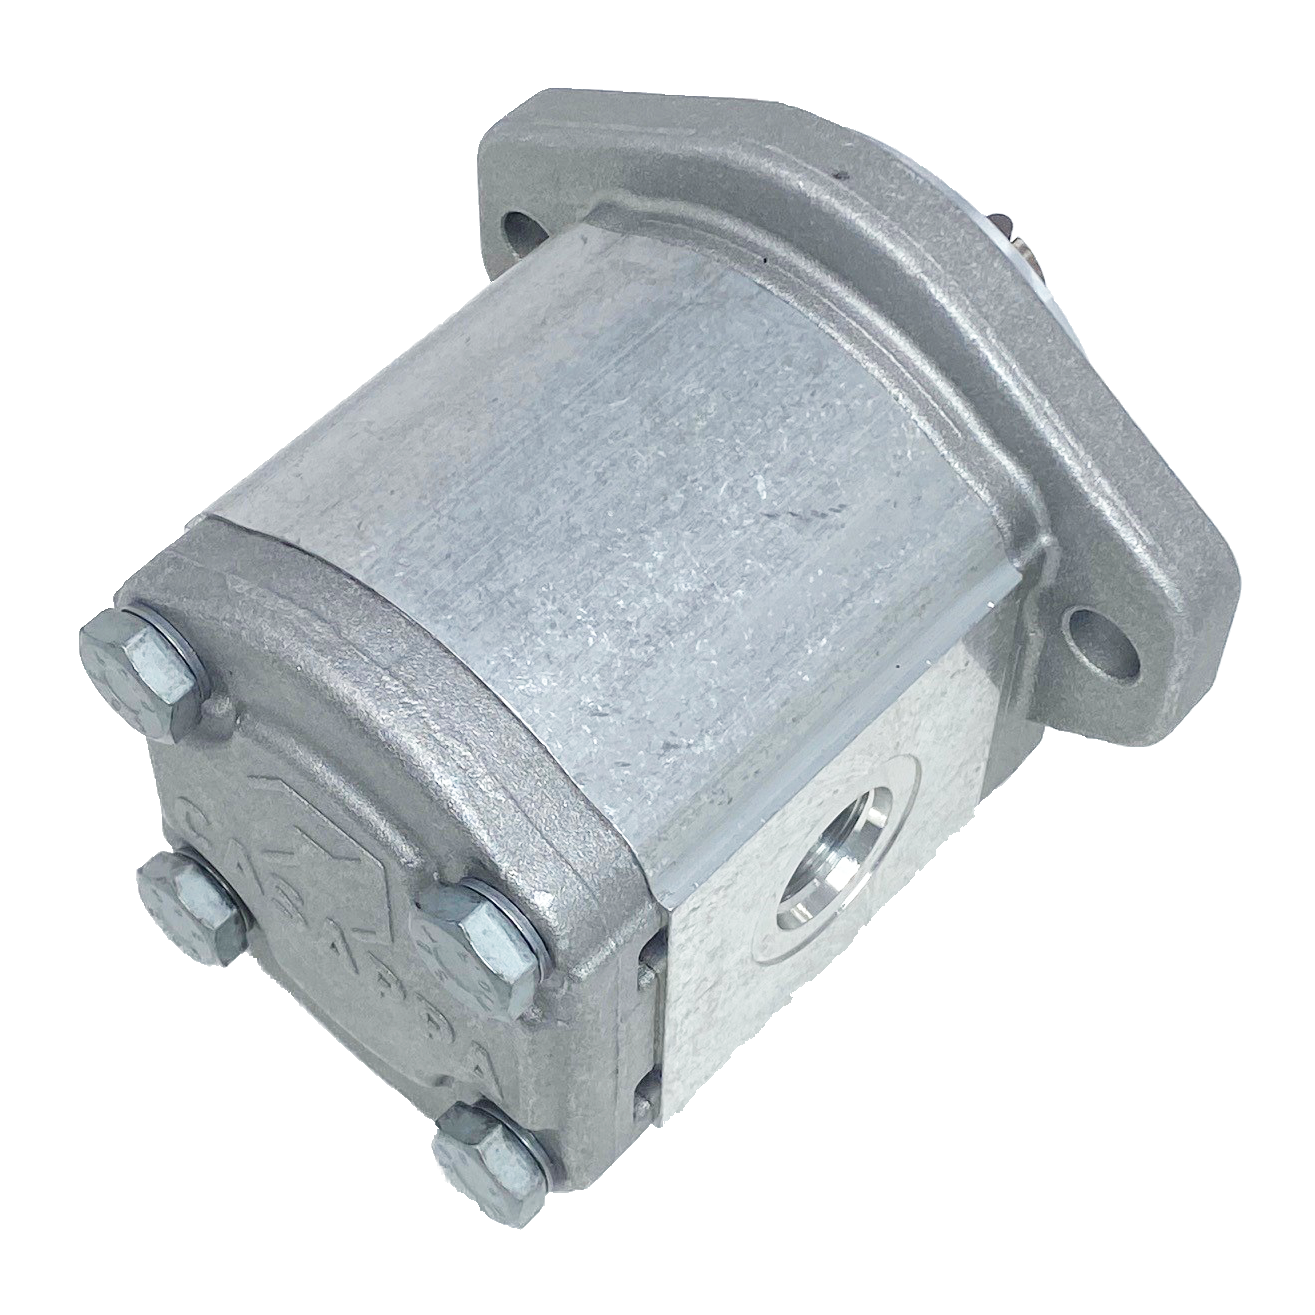 PLM20.20B0-50S1-LOC/OD-N-EL : Casappa Polaris Gear Motor, 21.14cc, 2900psi Rated, 3000RPM, Reversible Interior Drain, 3/4" Bore x 3/16" Key Shaft, SAE A 2-Bolt Flange, 0.625 (5/8") #10 SAE Inlet, 0.75 (3/4") #12 SAE Outlet, Aluminum Body & Flange